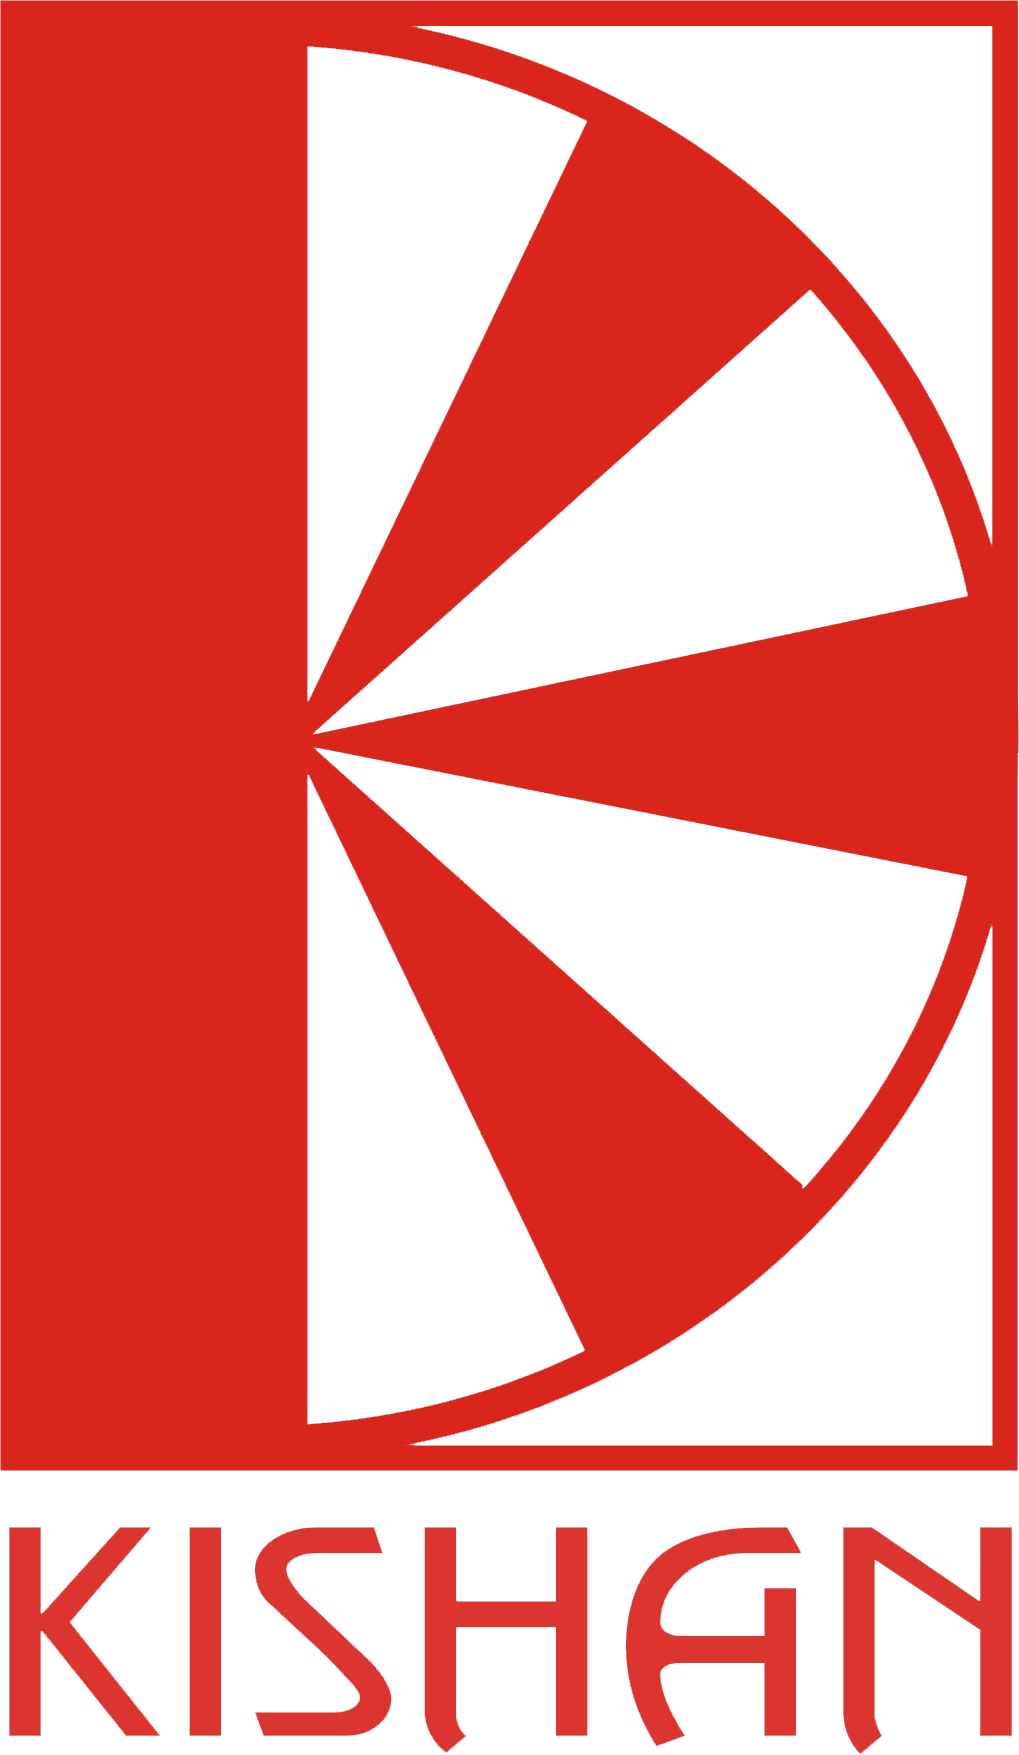 Kishan Name Red Logo